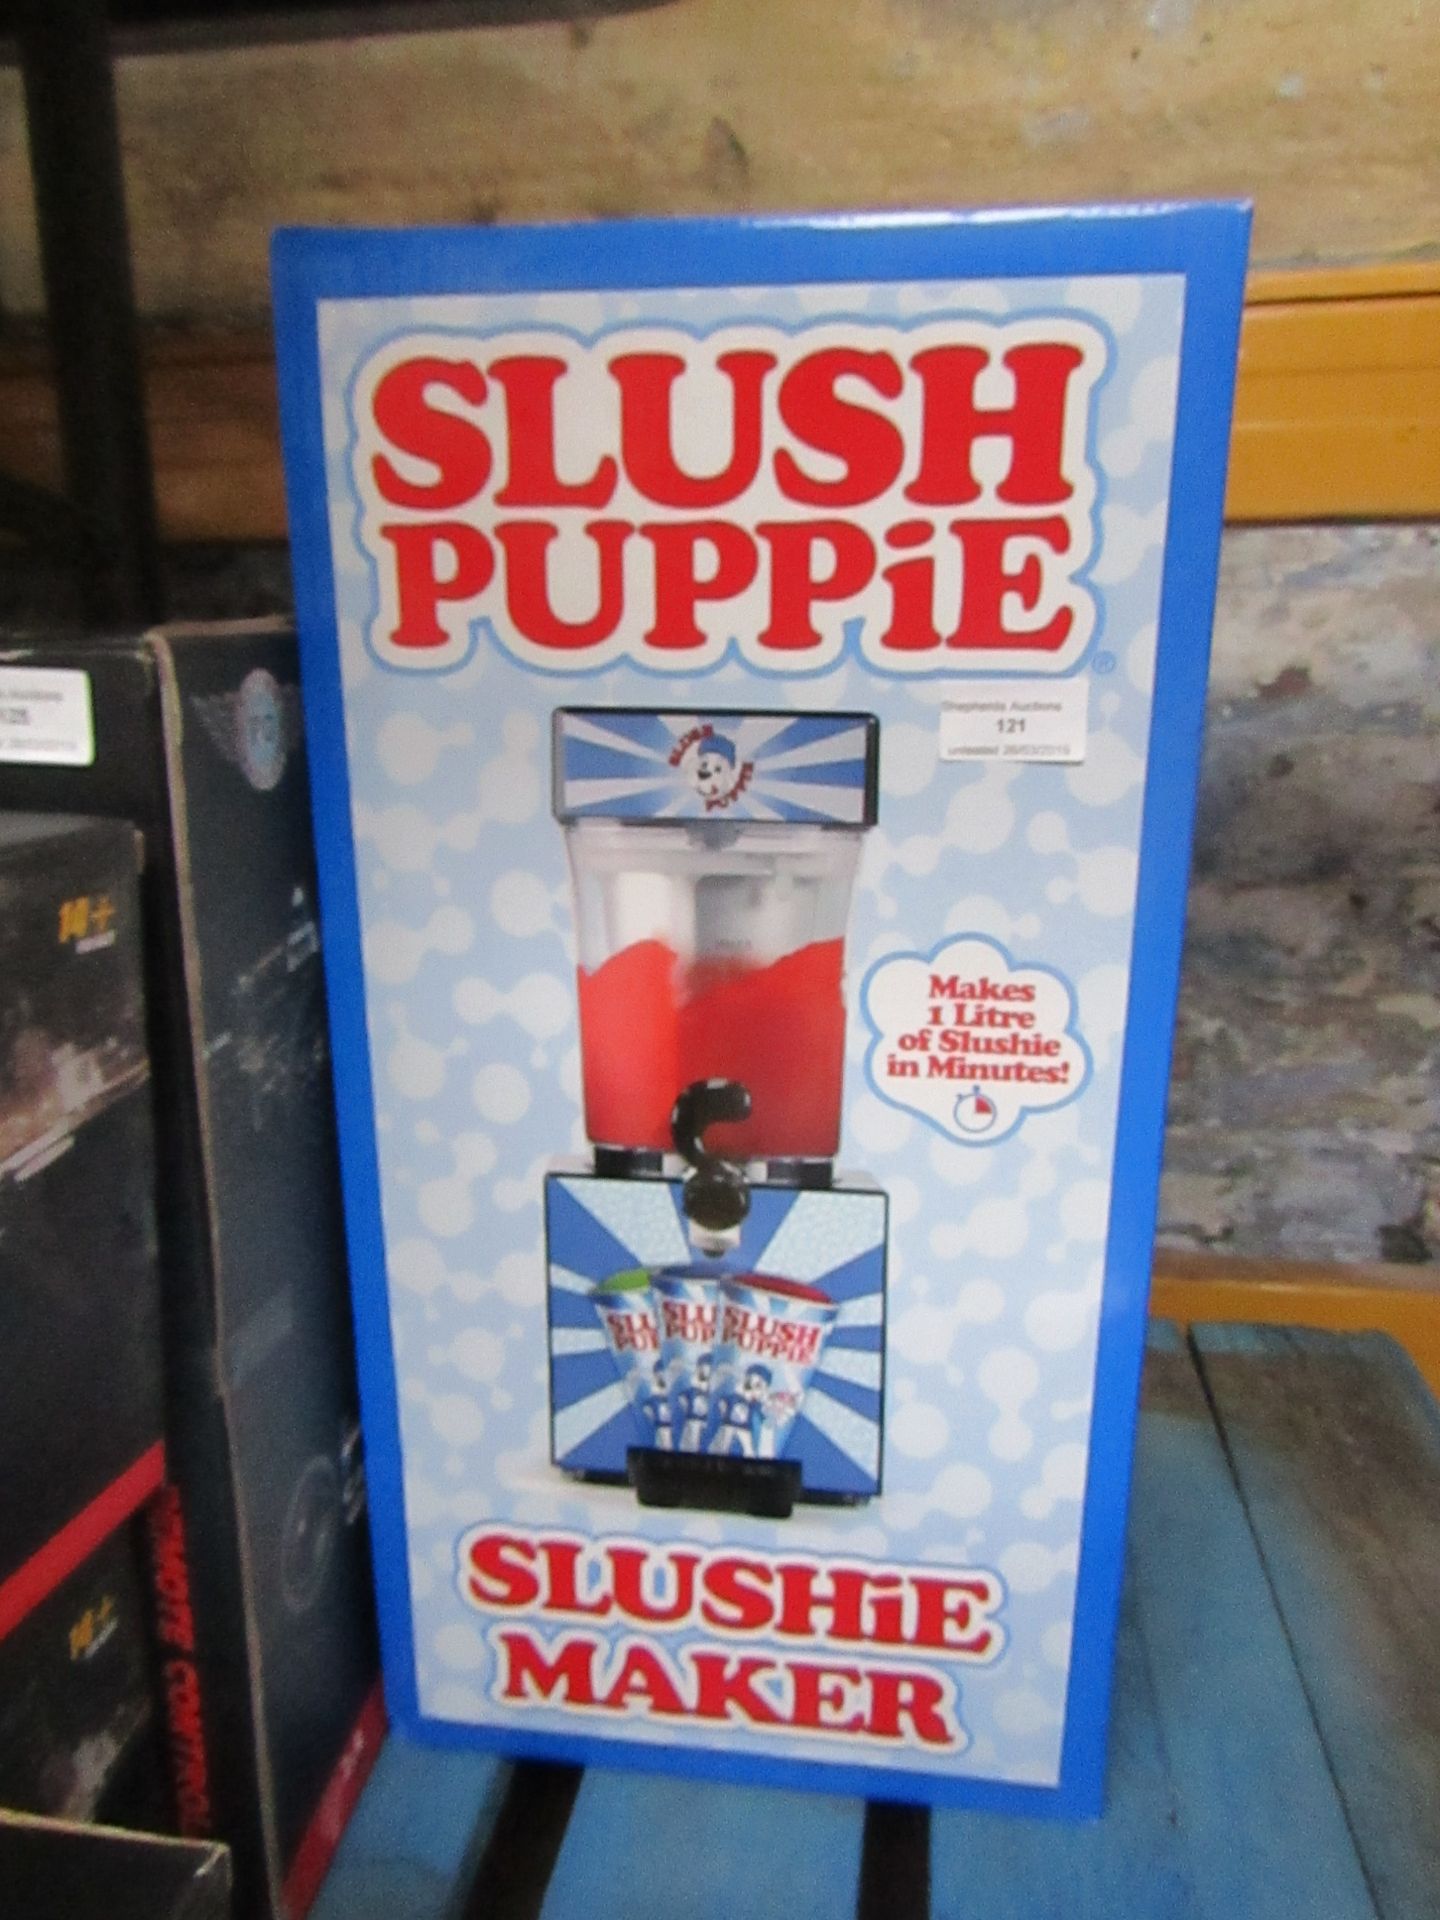 Slush puppie maker boxed and unchecked